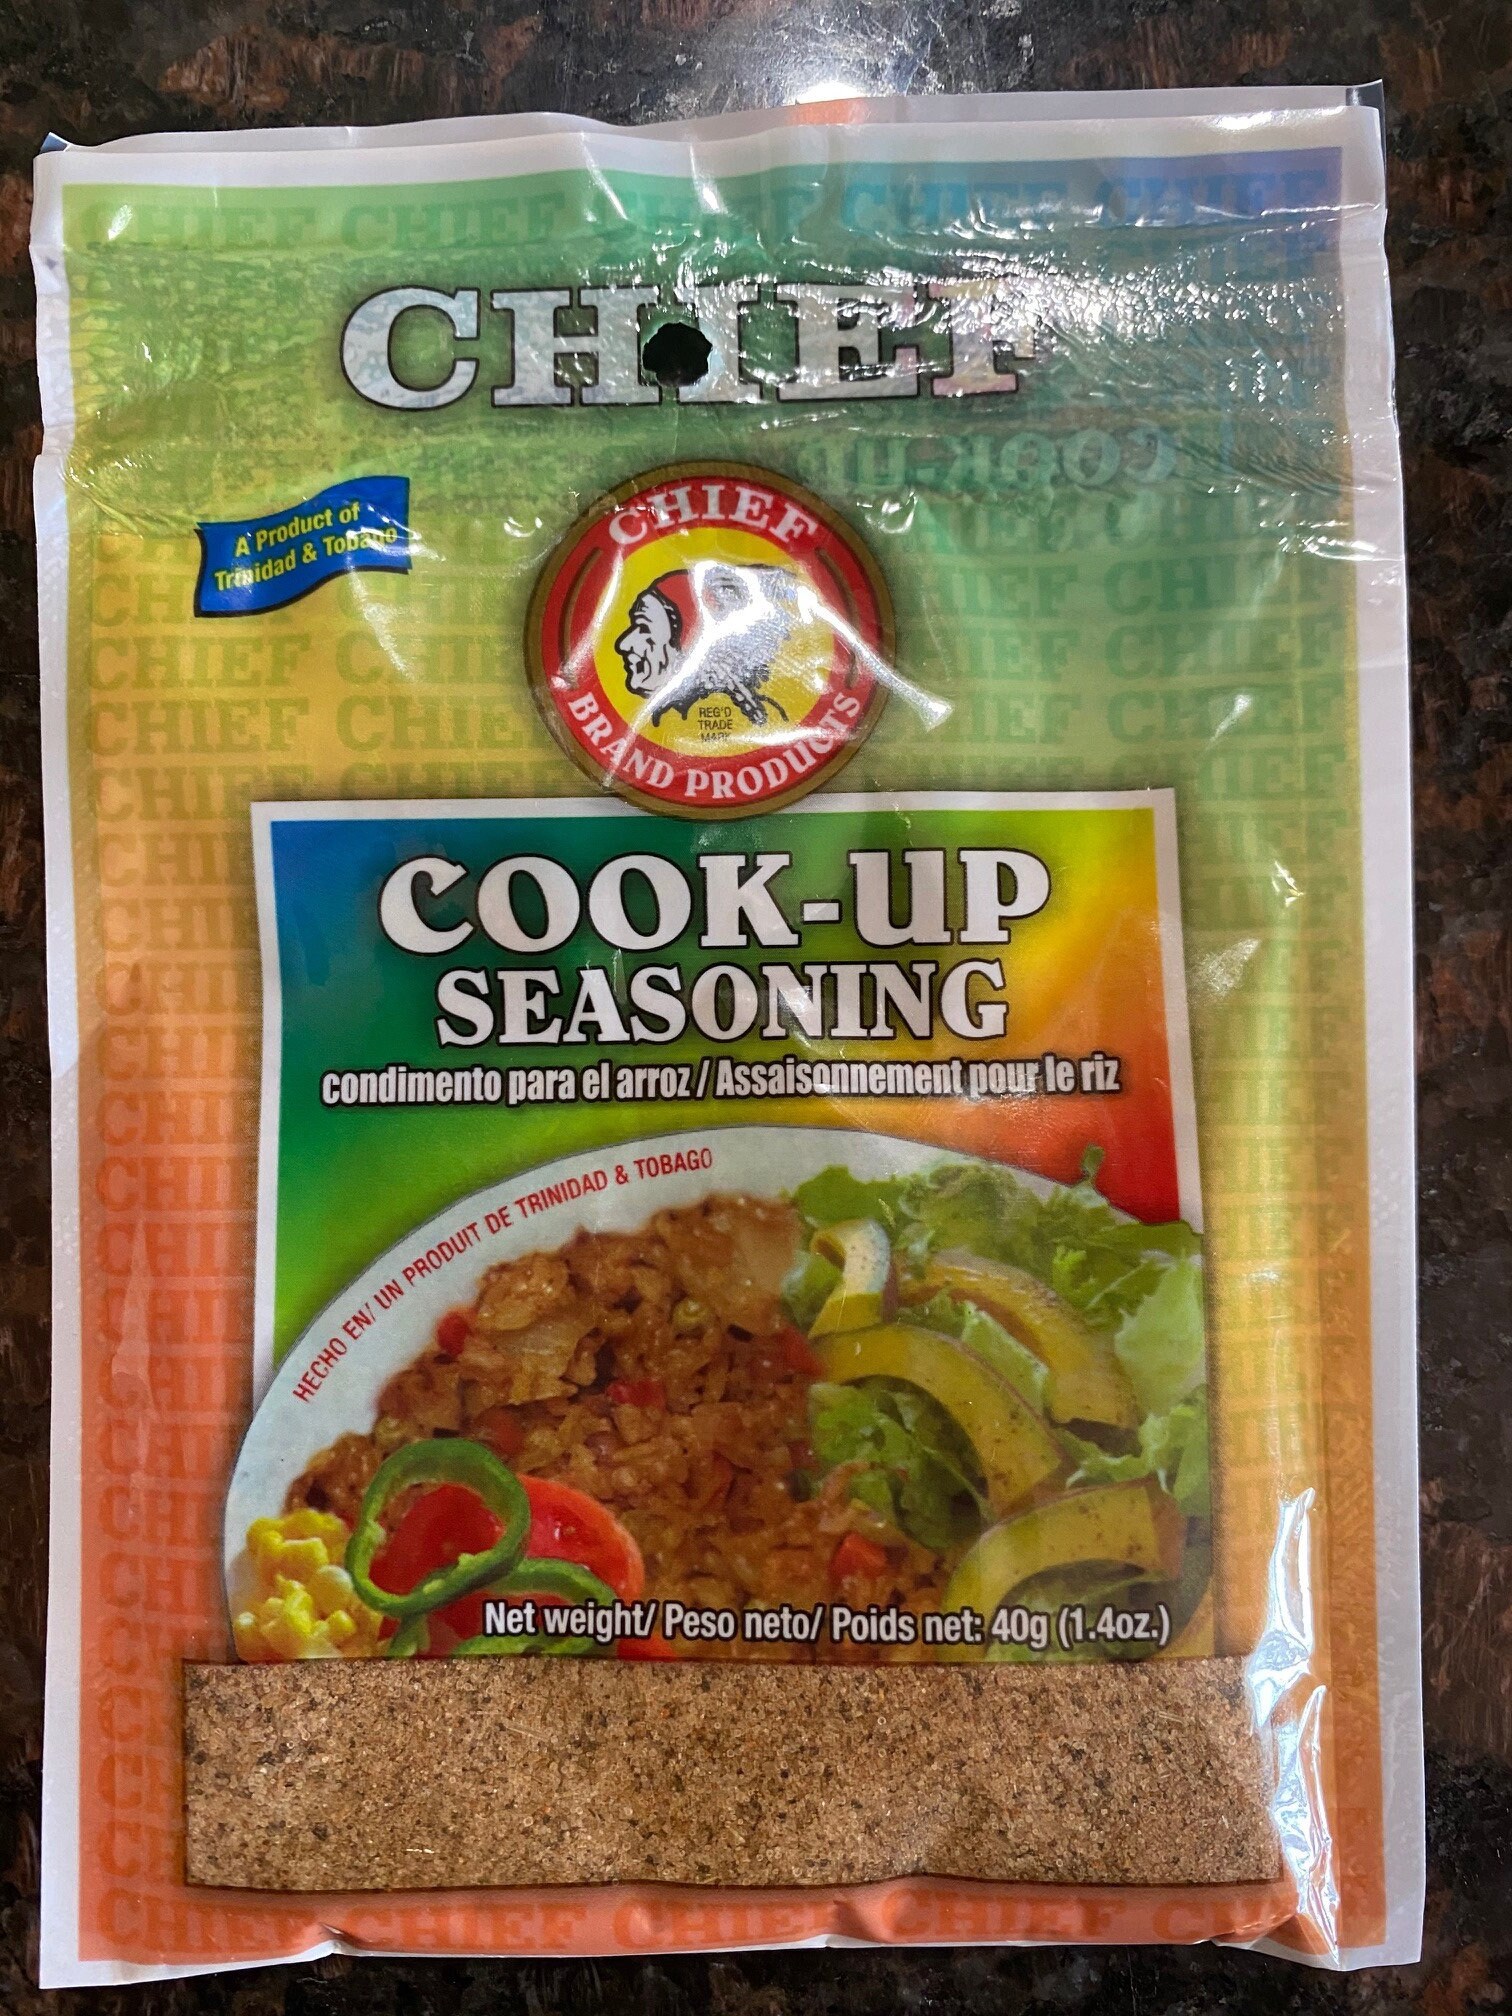 Chief Fish Seasoning (40grams Single Bag) - Product of Trinidad